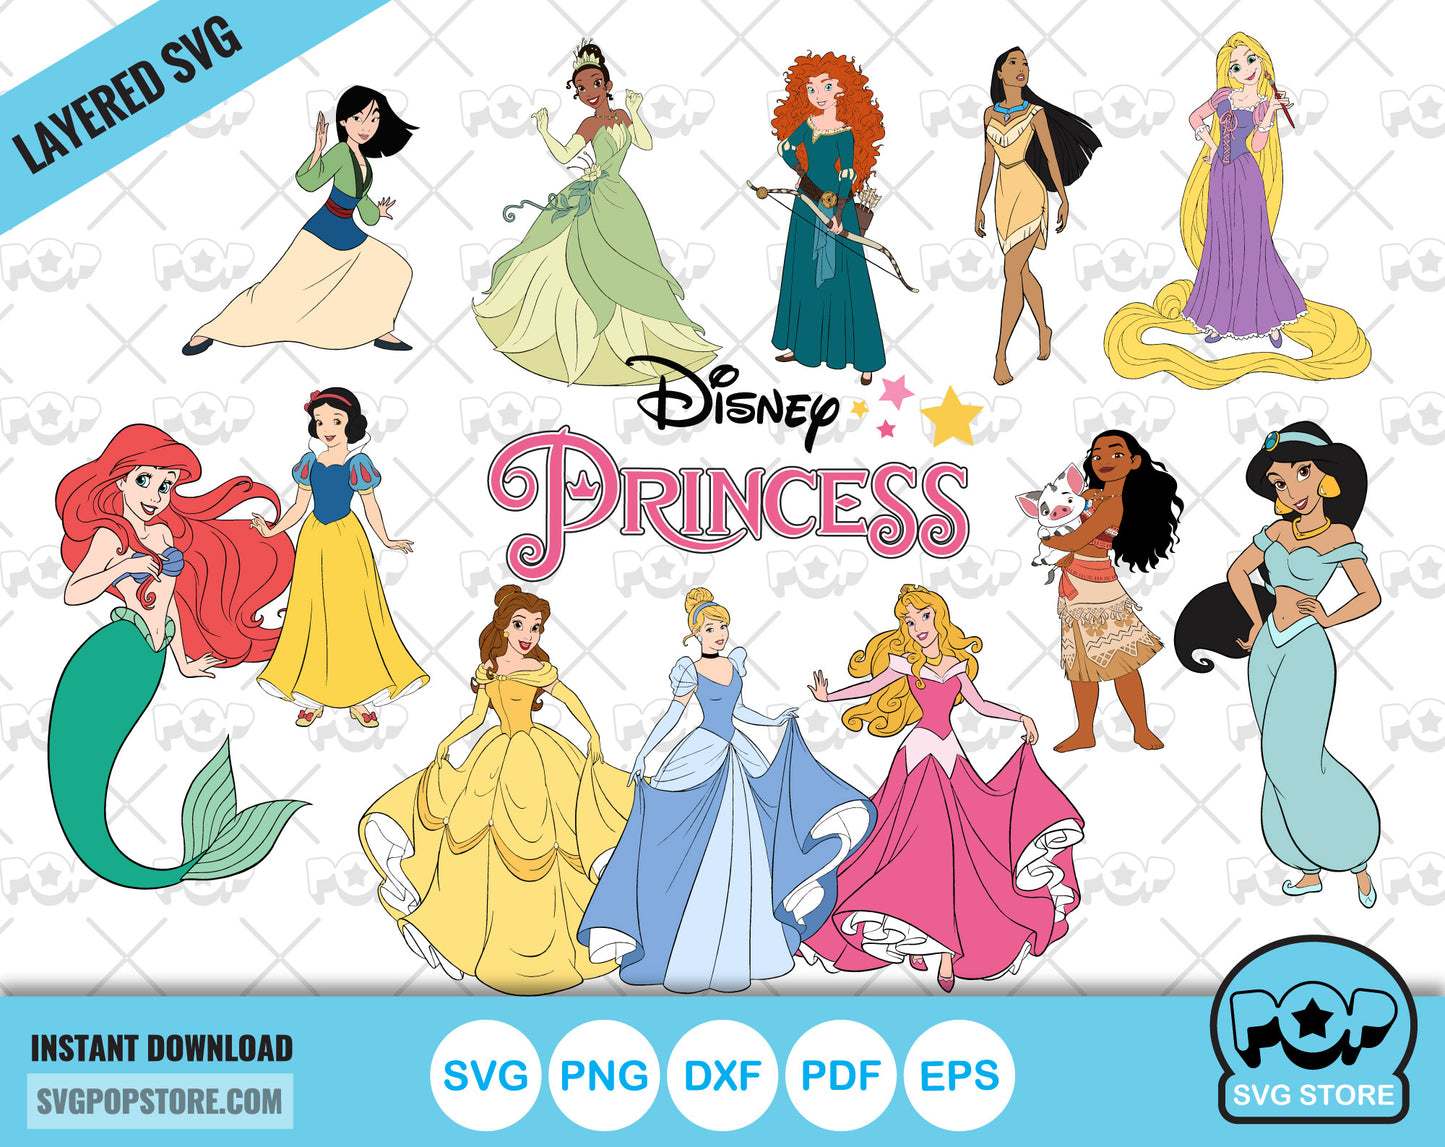 Classic Princesses clipart set, Disney Princess svg cut files for Cricut / Silhouette, Princess png